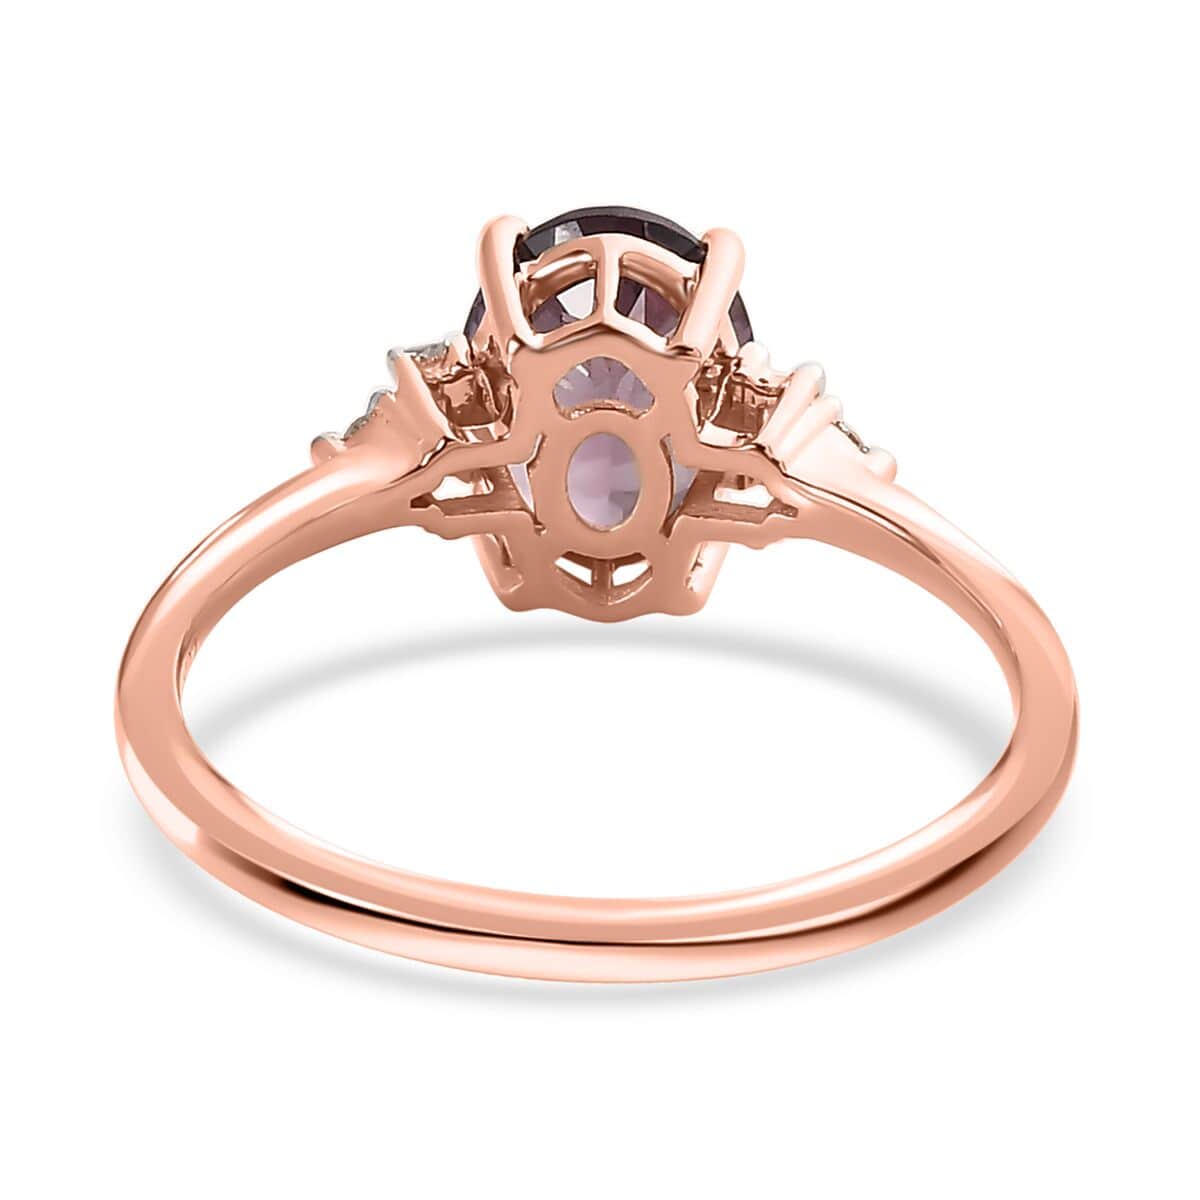 Luxoro 10K Rose Gold Premium Narsipatnam Purple Spinel and G-H I3 Diamond Ring 1.75 ctw image number 4